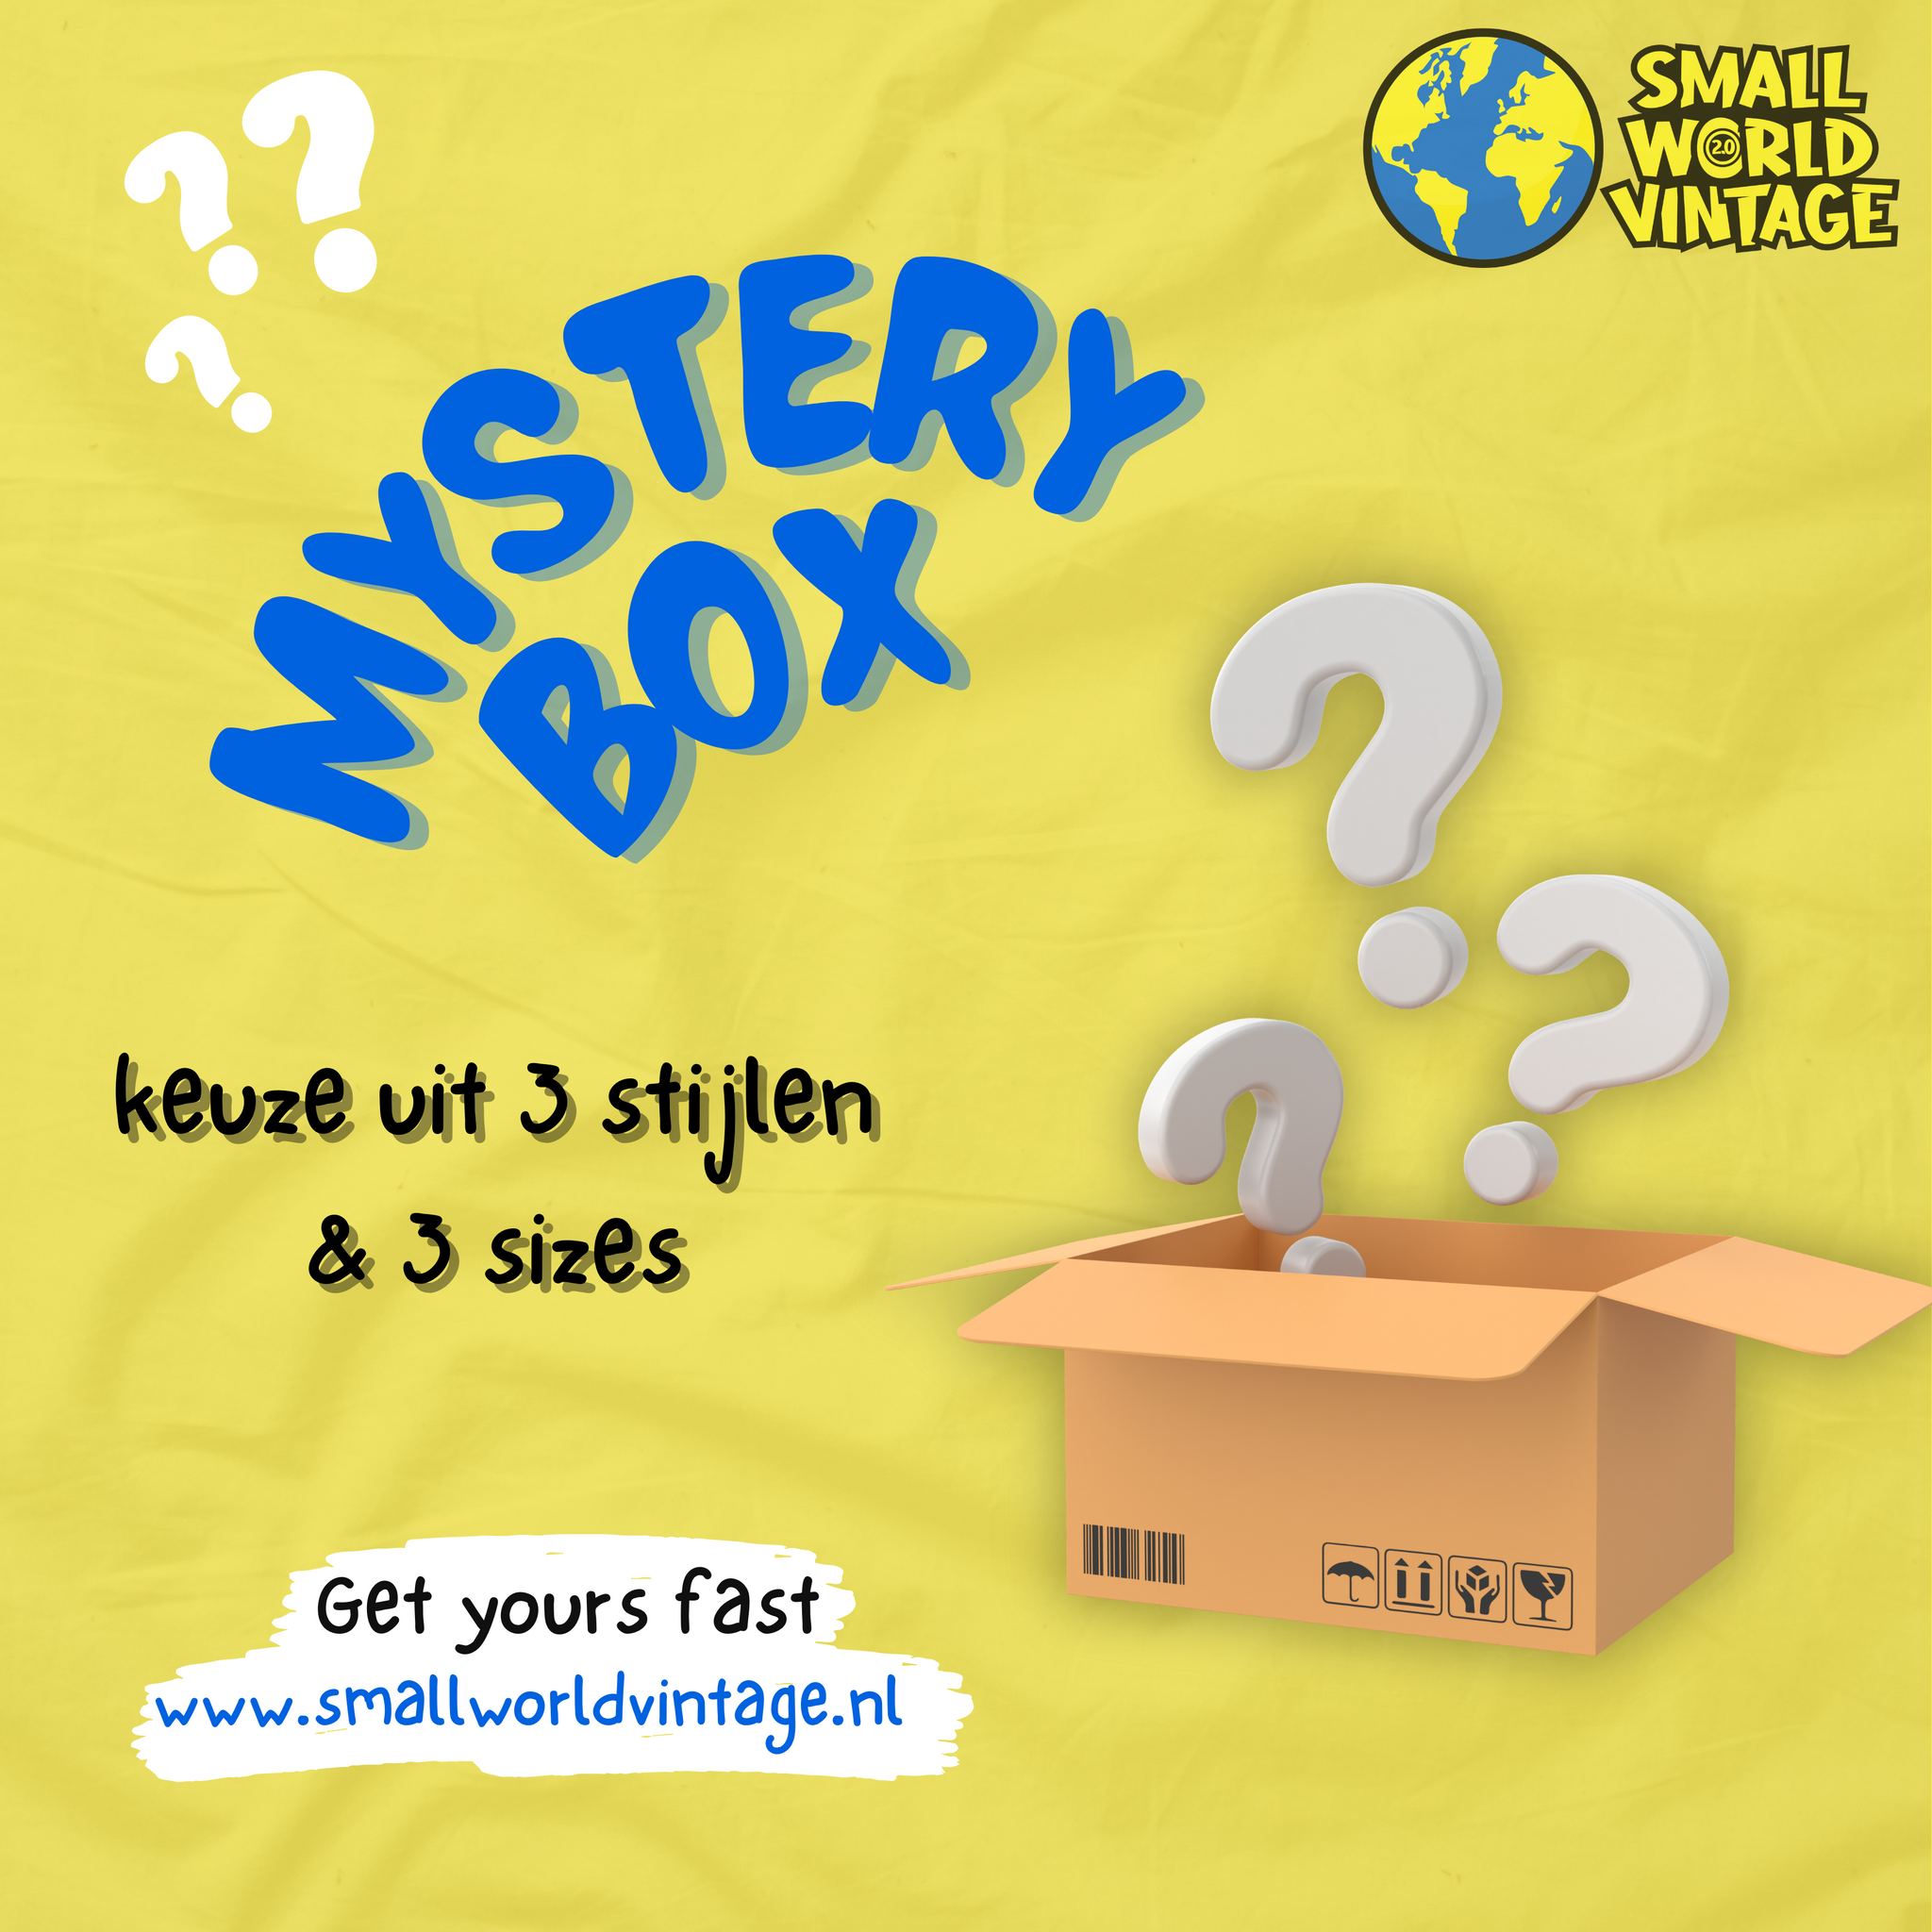 Mystery box 1: The bottom line